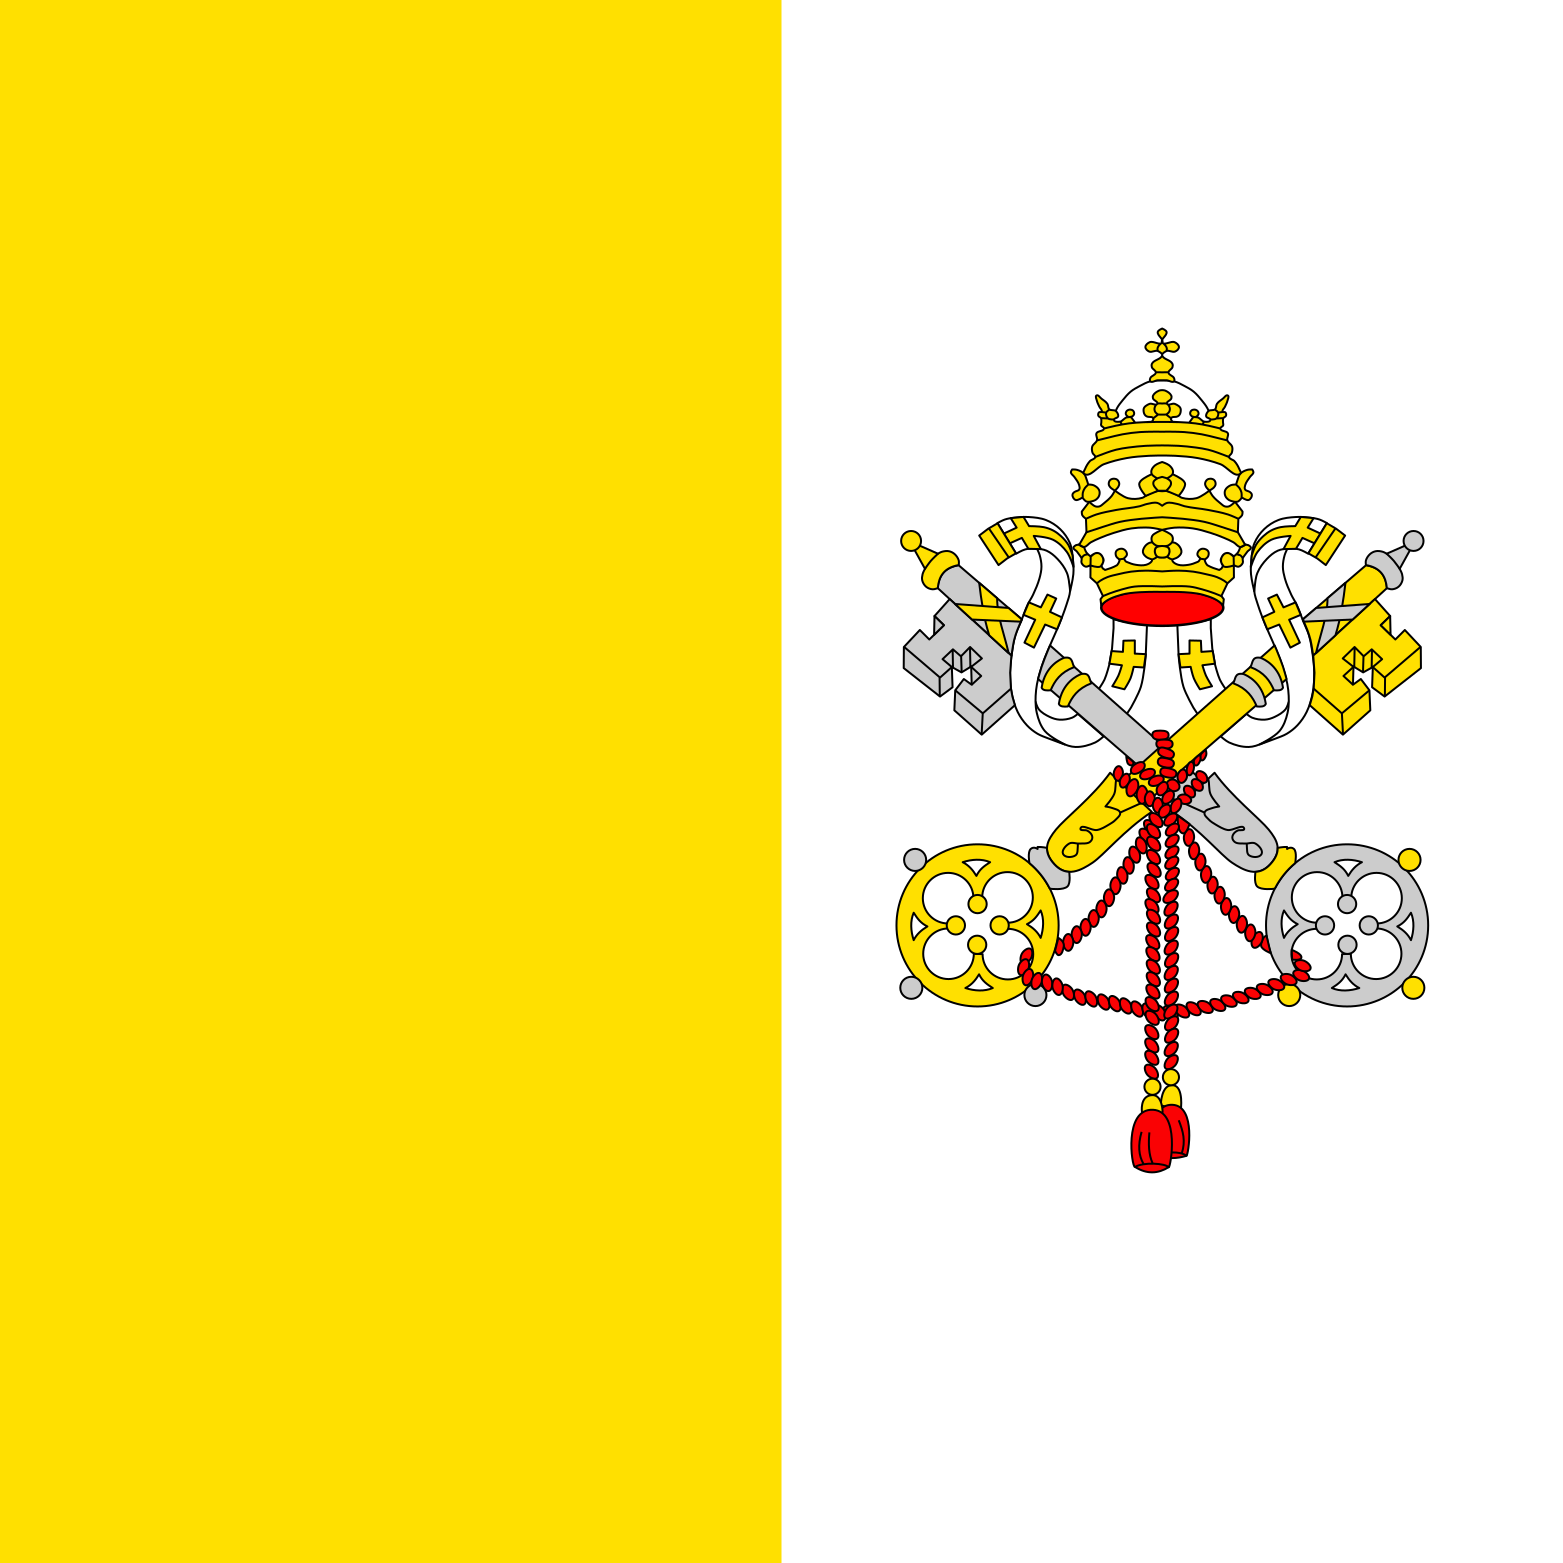 Free Vatican City Flag Documents: PDF, DOC, DOCX, HTML & More!